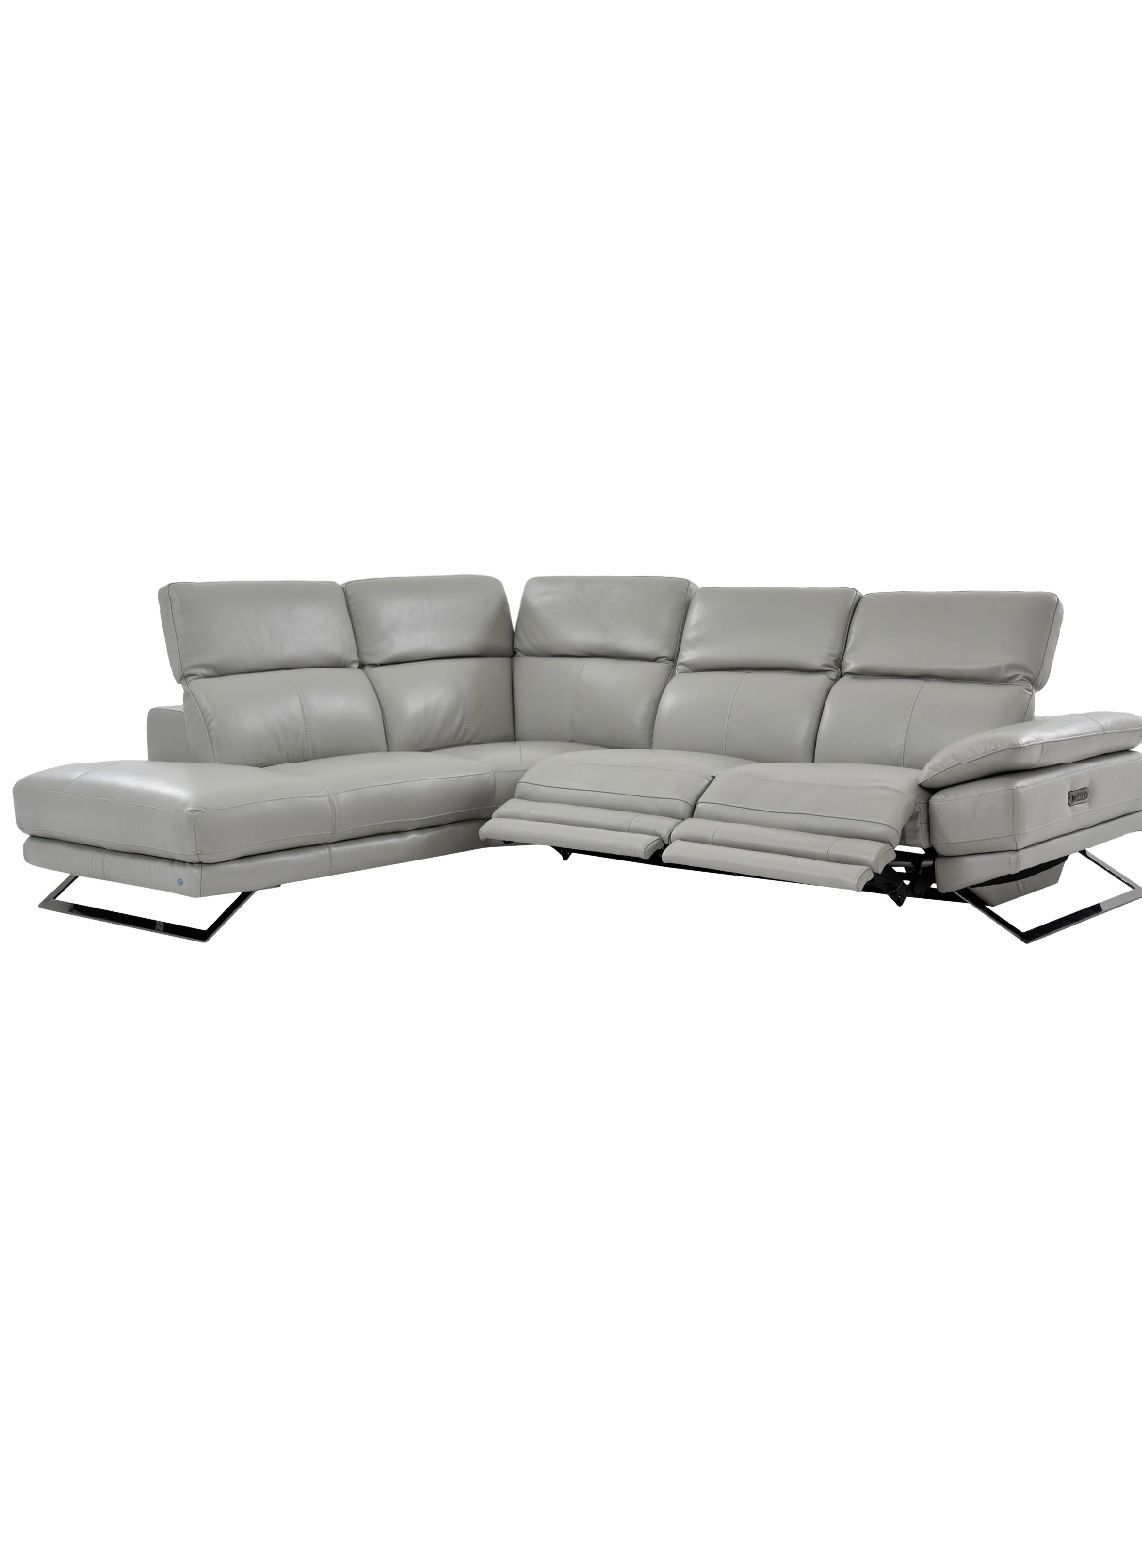 Gray Leather Reclining Sofa 